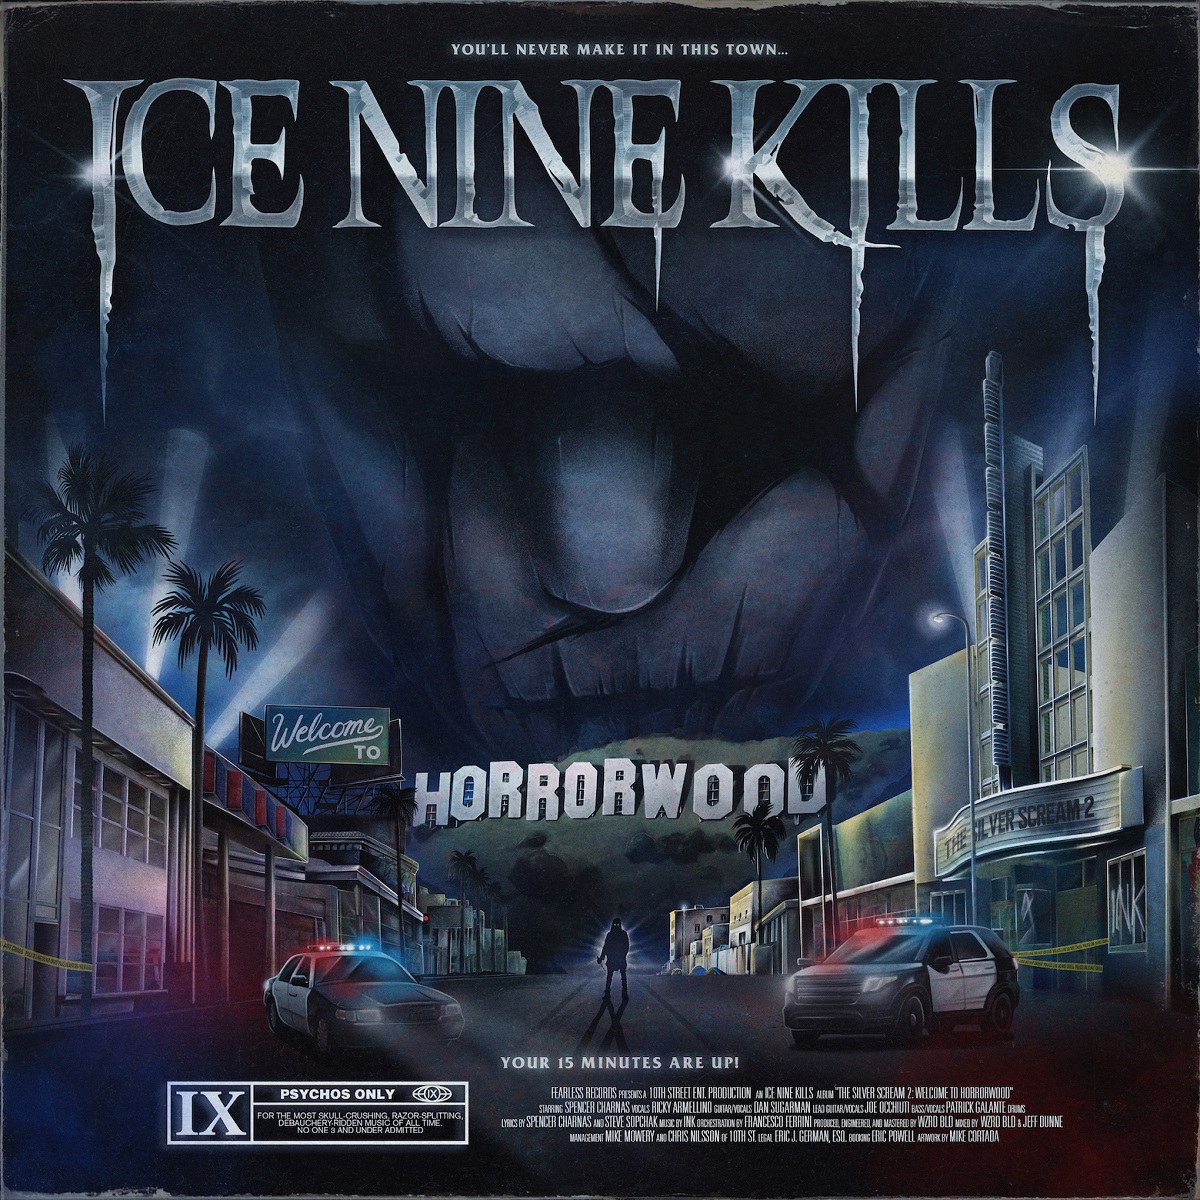 Ice Nine Kills - The Silver Scream 2 Welcome To Horrorwood Albumcover